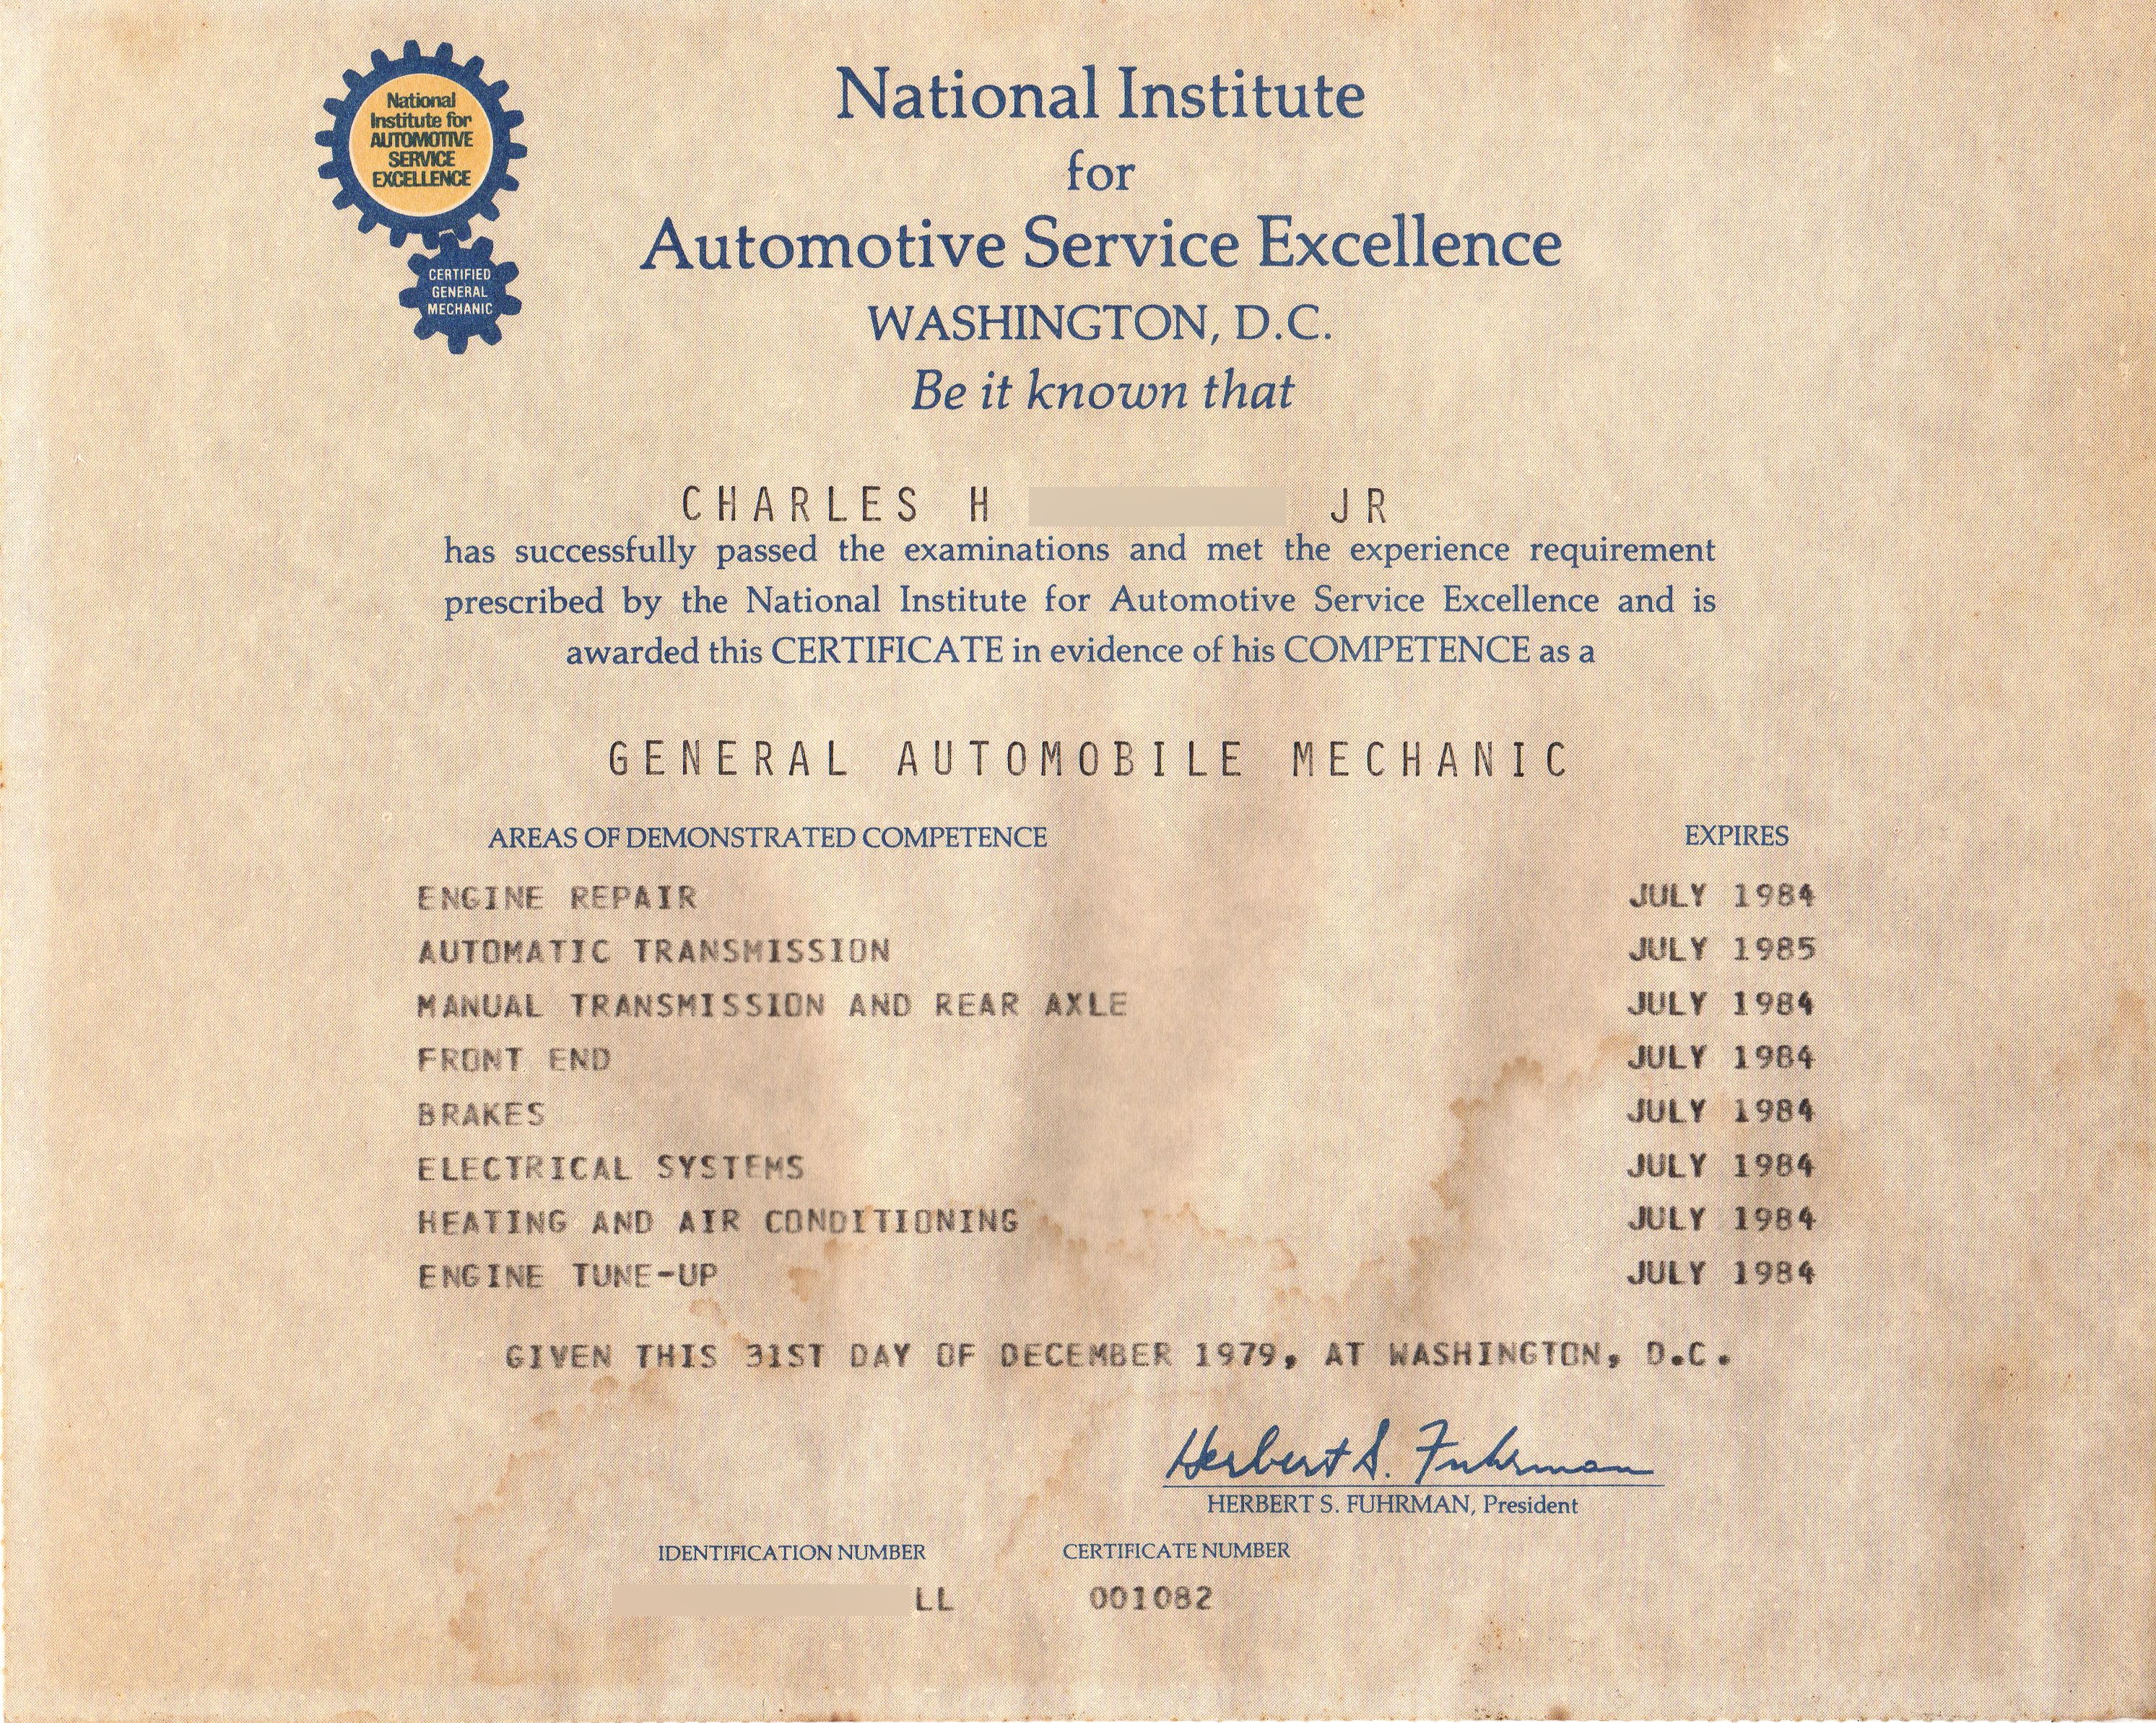 ASE Certificate BLUR.jpg